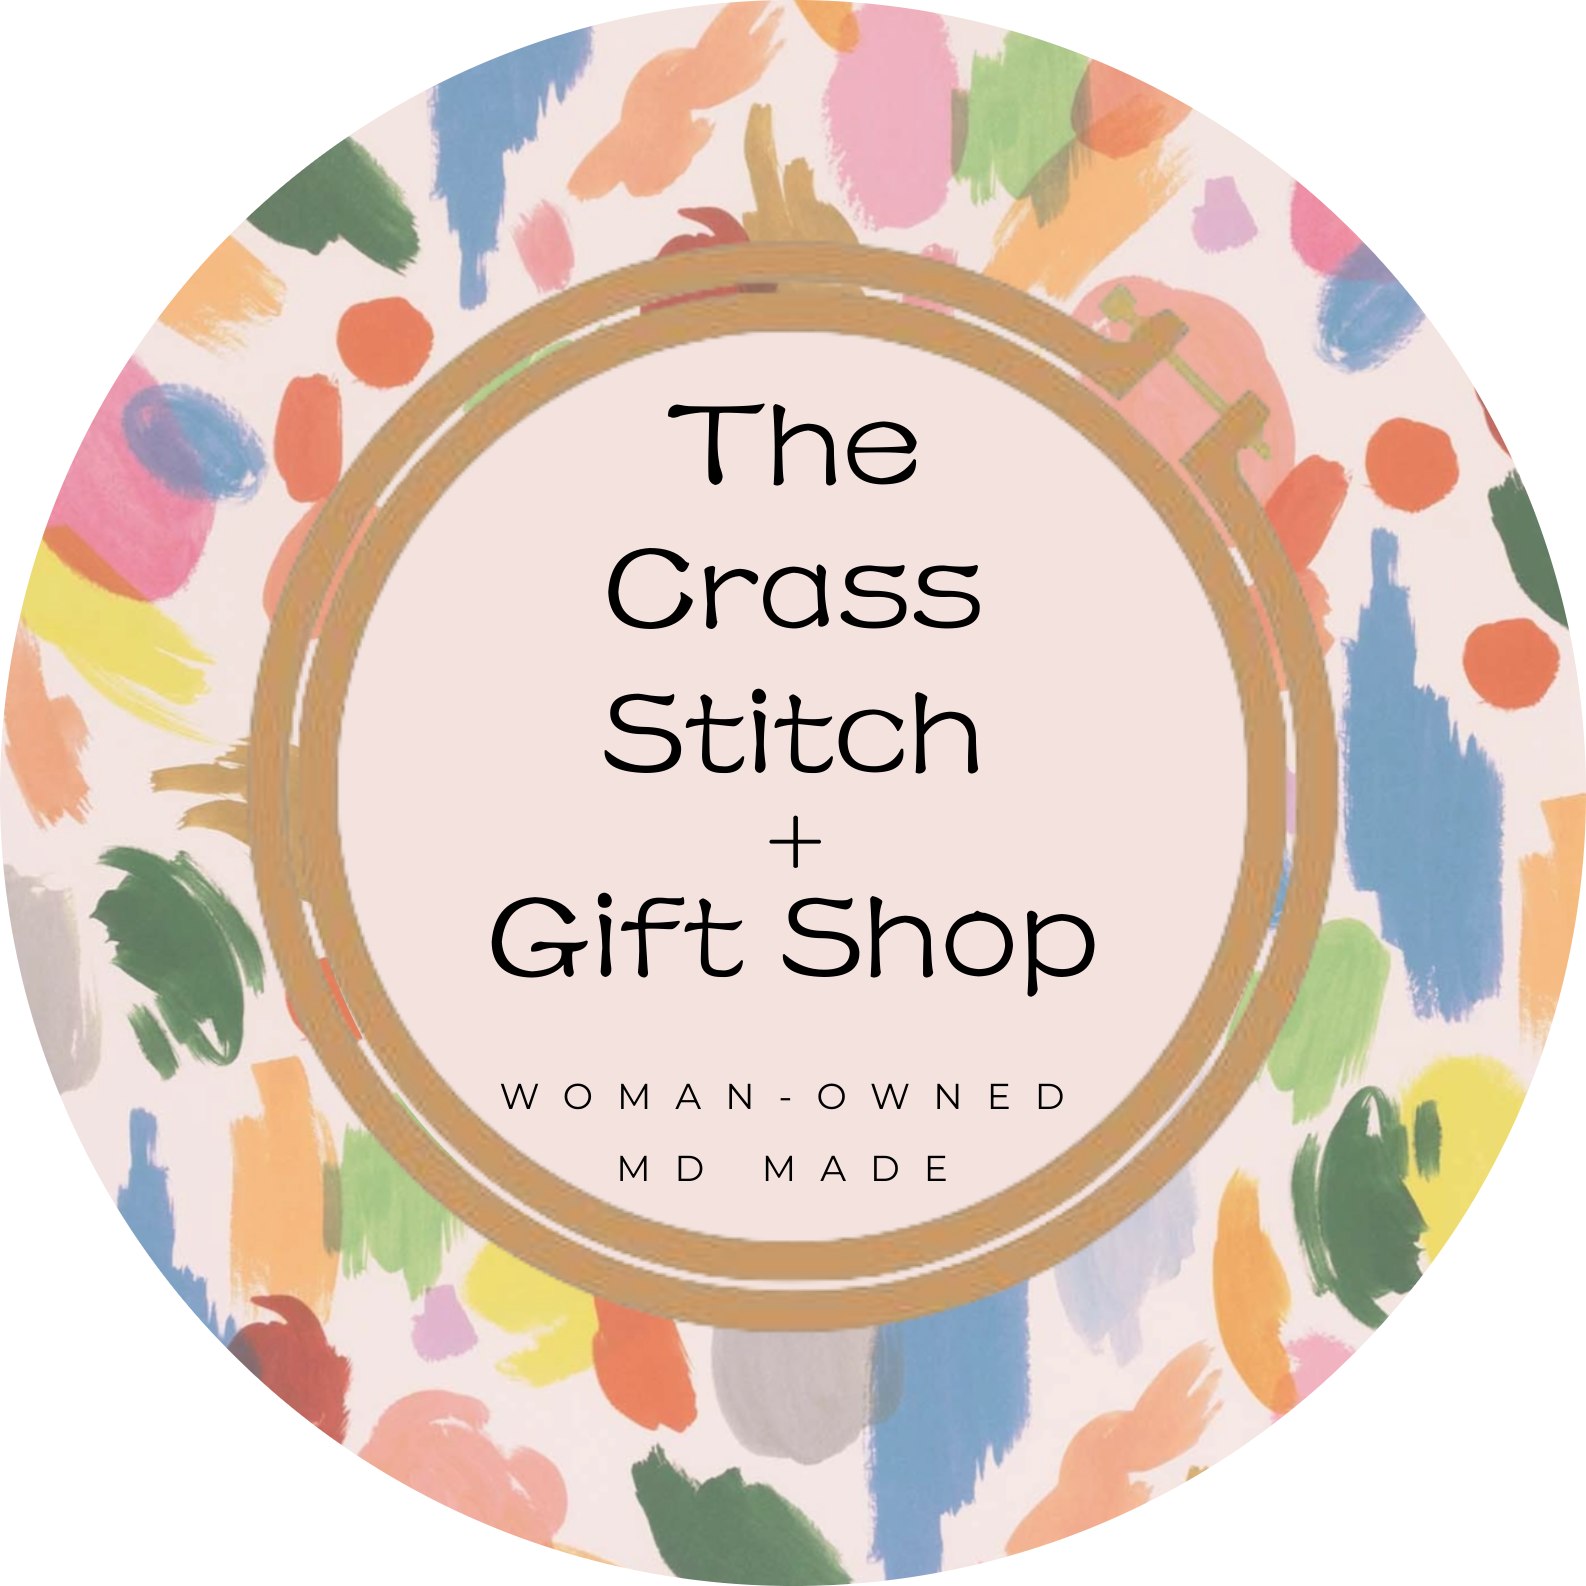 The Crass Stitch + Gift Shop